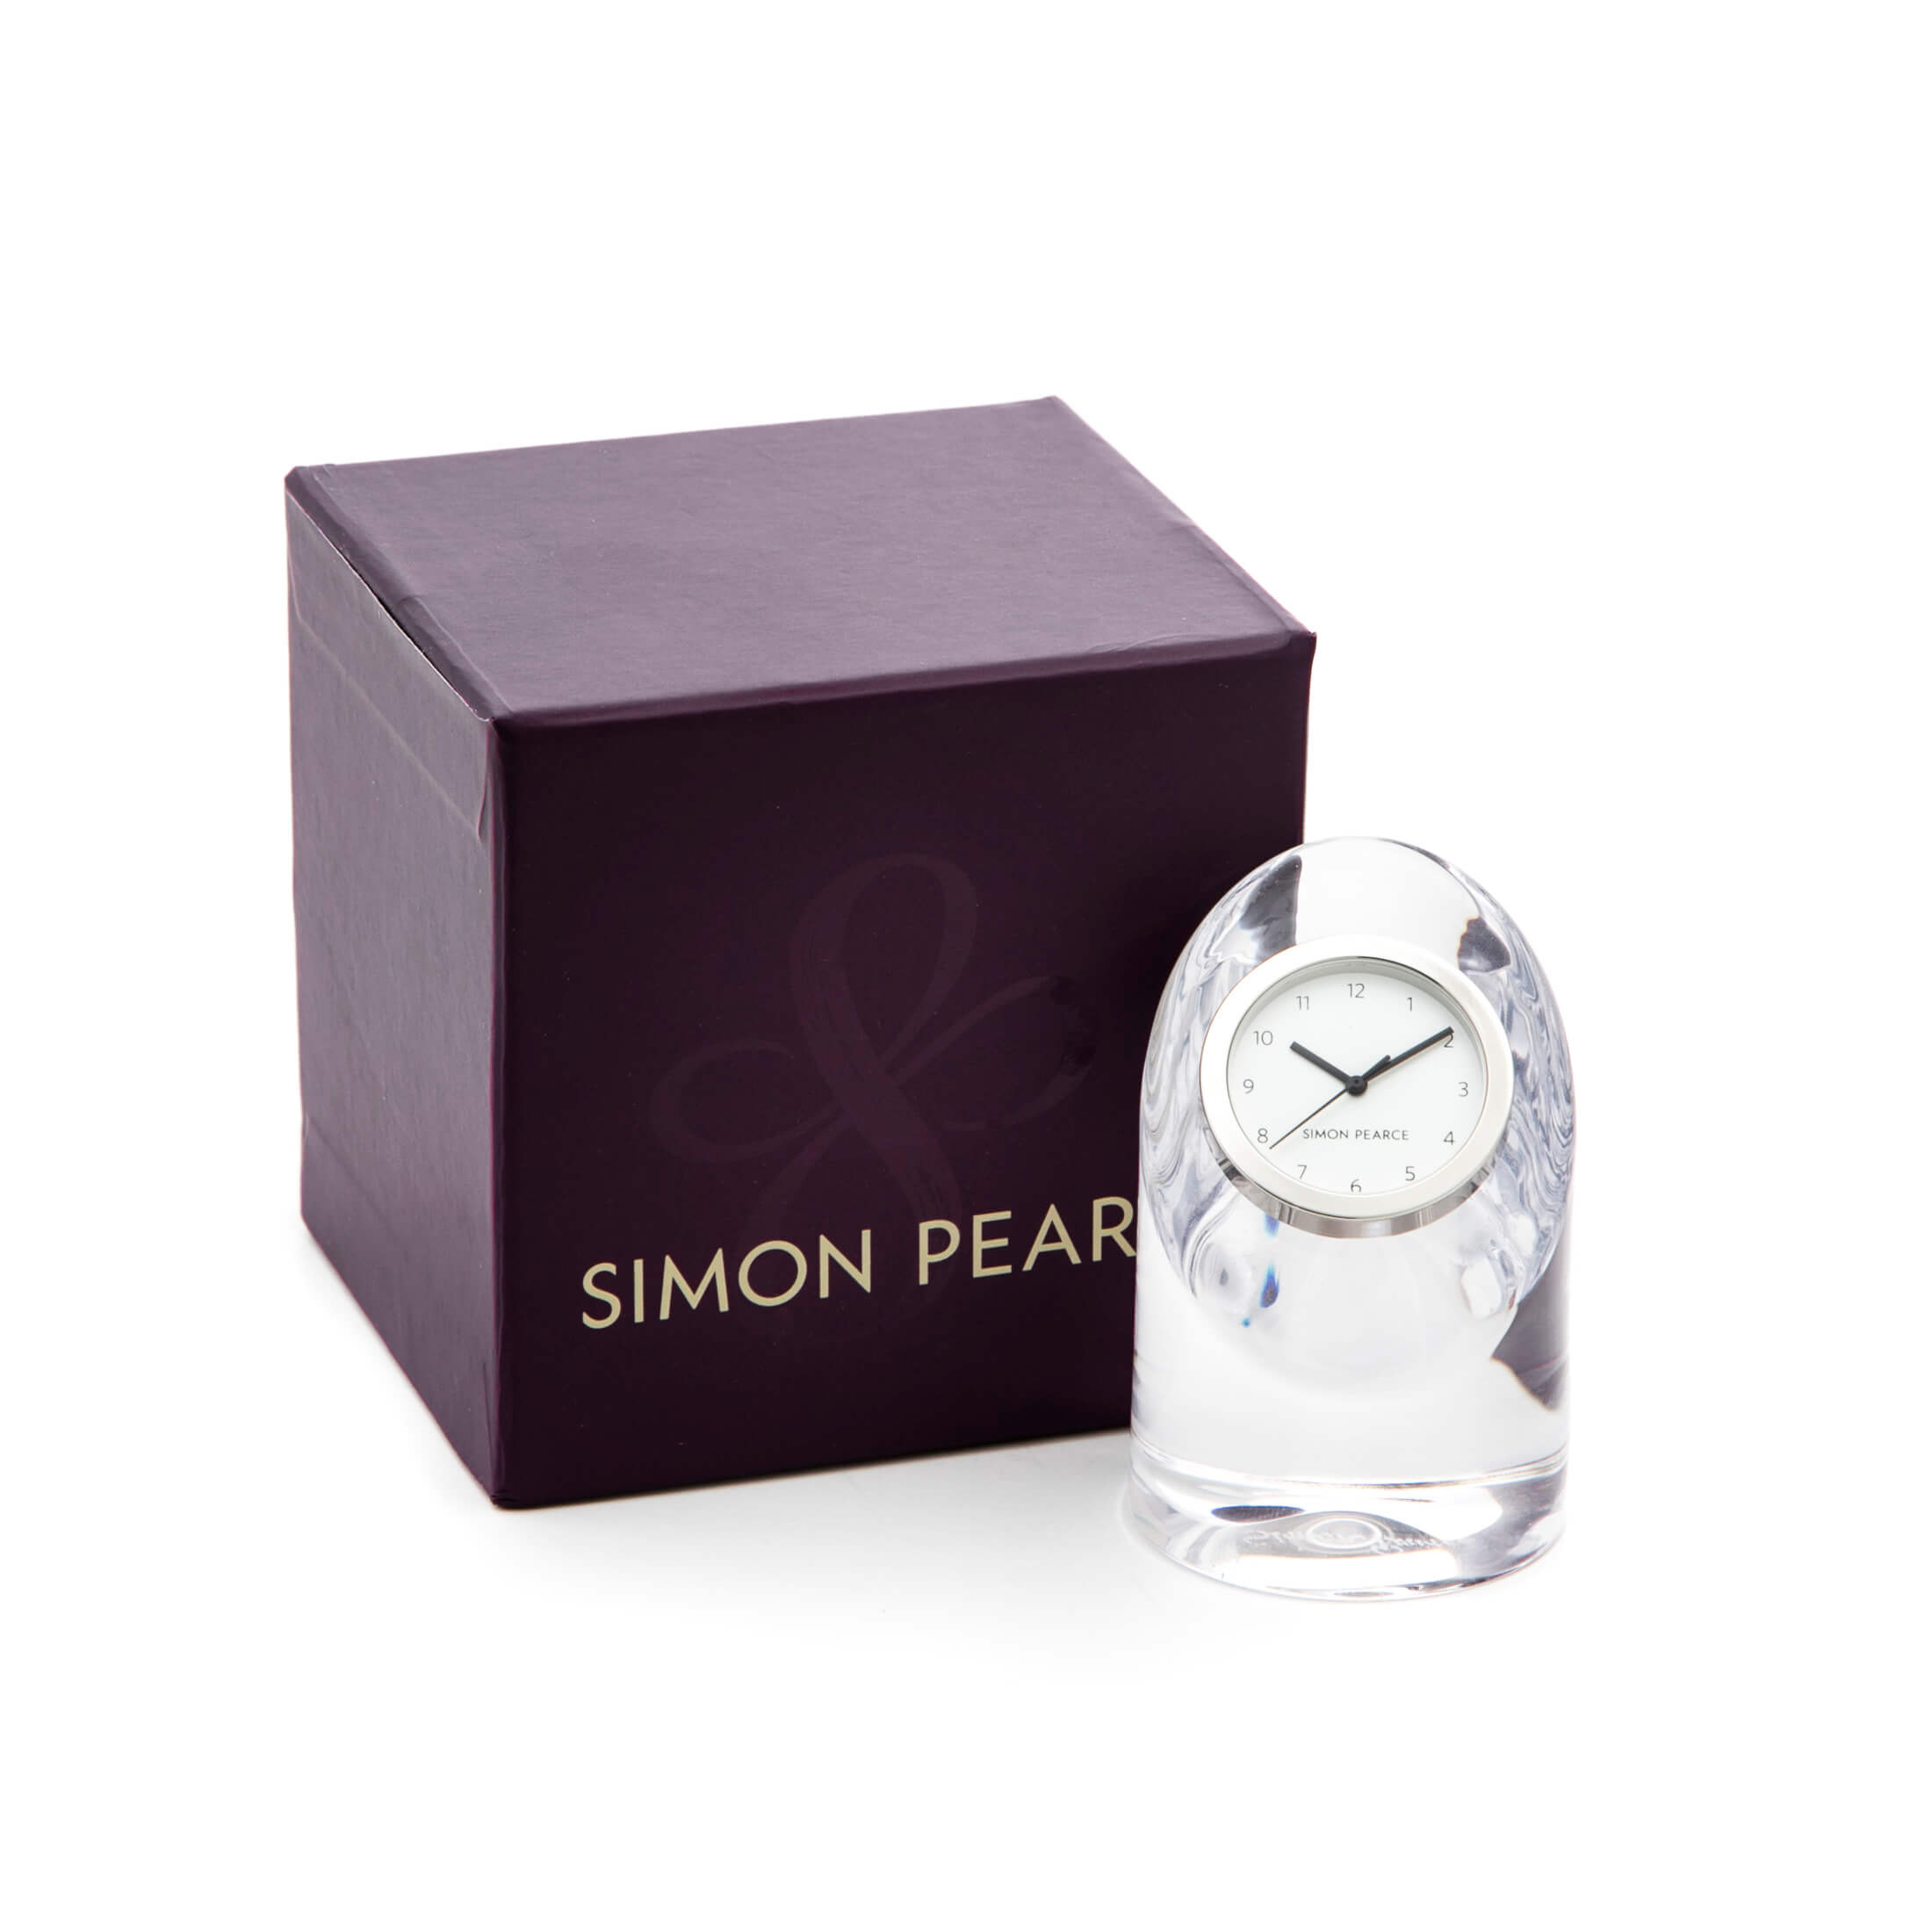 20 Wonderful Simon Pearce Bud Vase 2024 free download simon pearce bud vase of barre mini clock in a gift box for 1689 barreminiclock 2